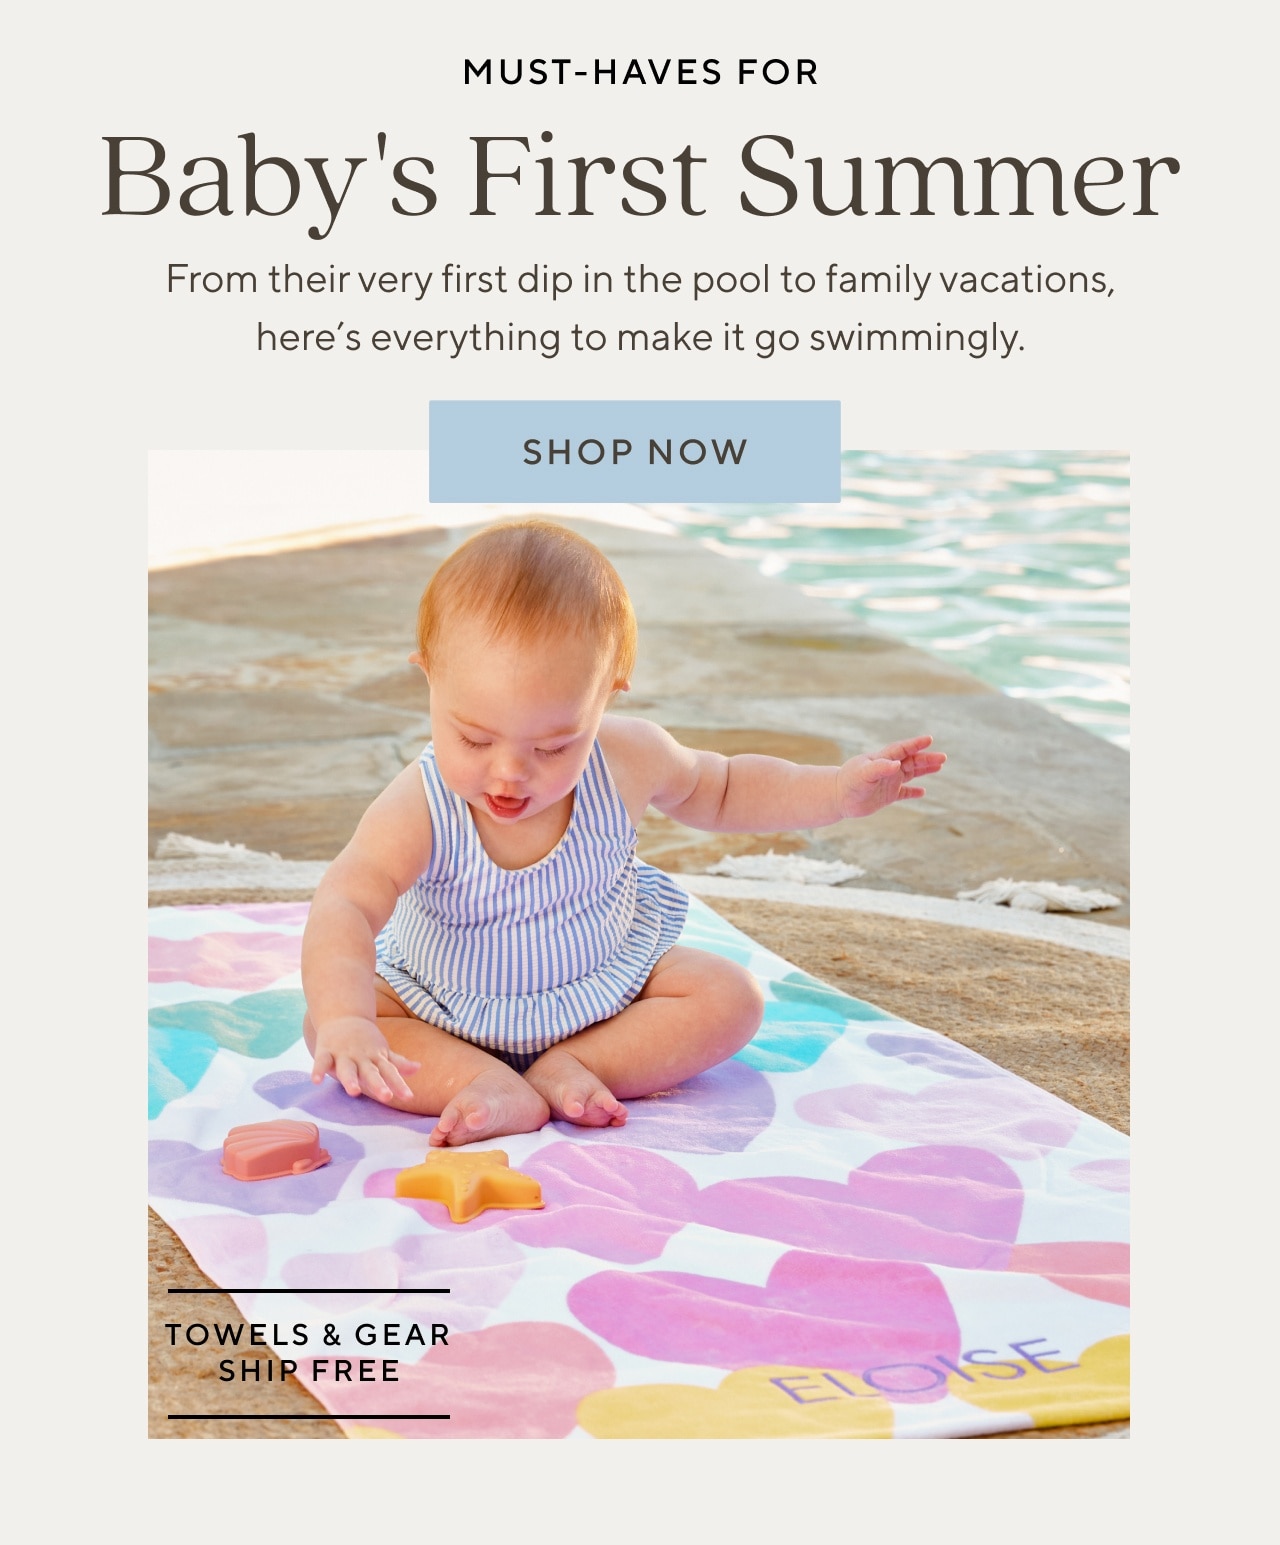 Baby's First Summer